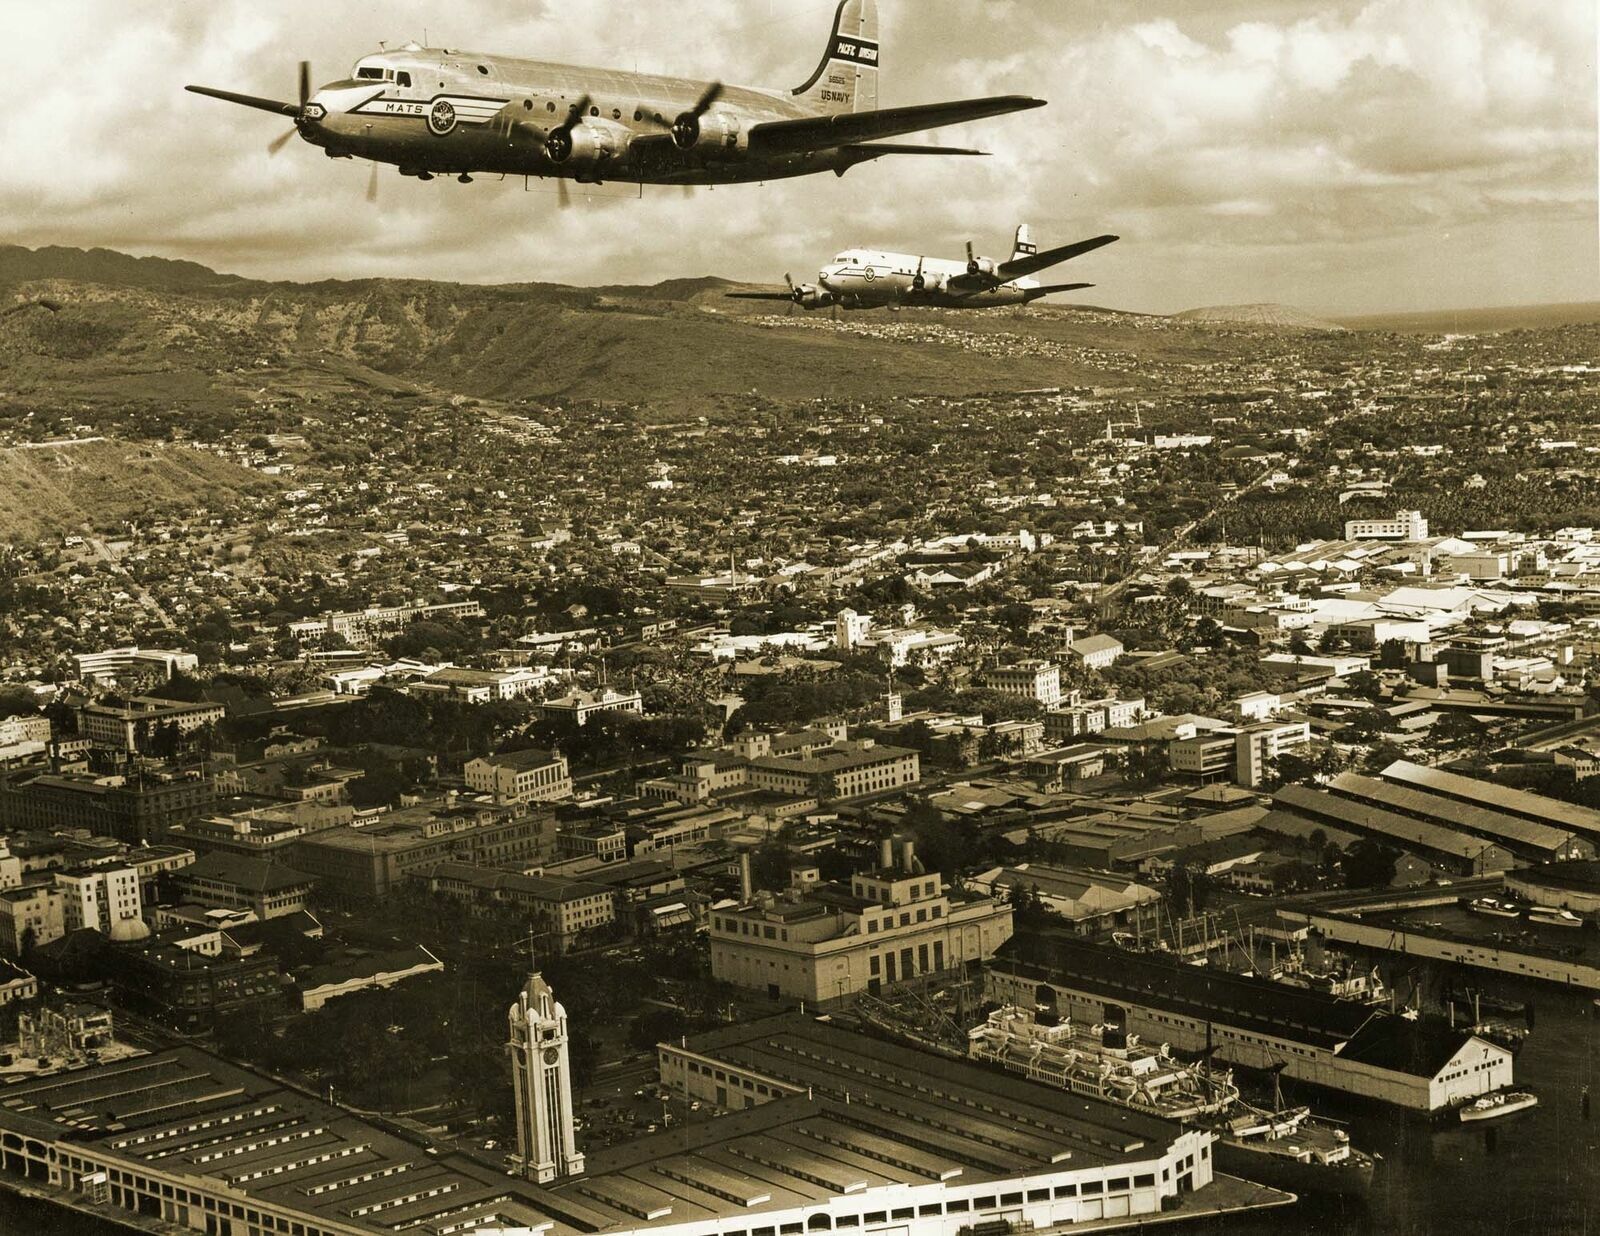 1951 Douglas C54 Skymasters Over Honolulu Hawaii Old Photo 8.5